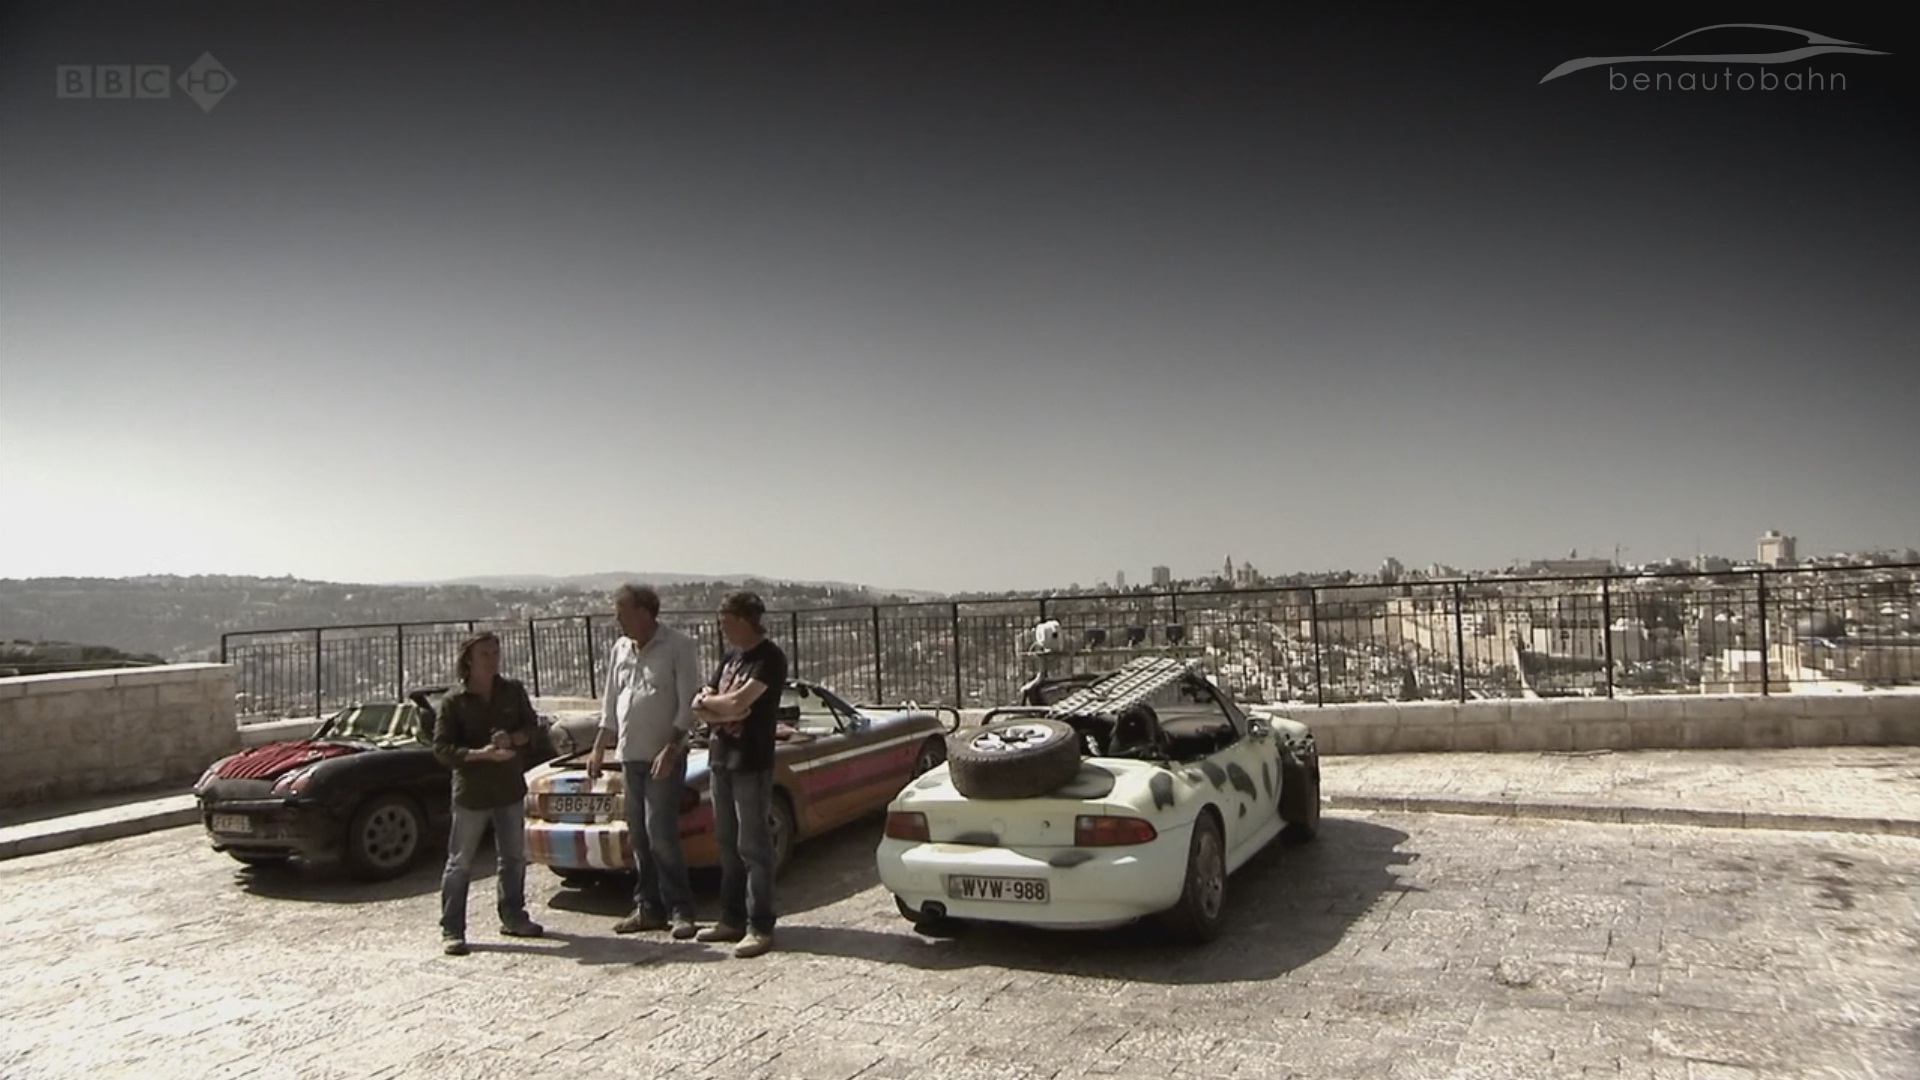 Top Gear season 16 episode 1 - BenAutobahn.